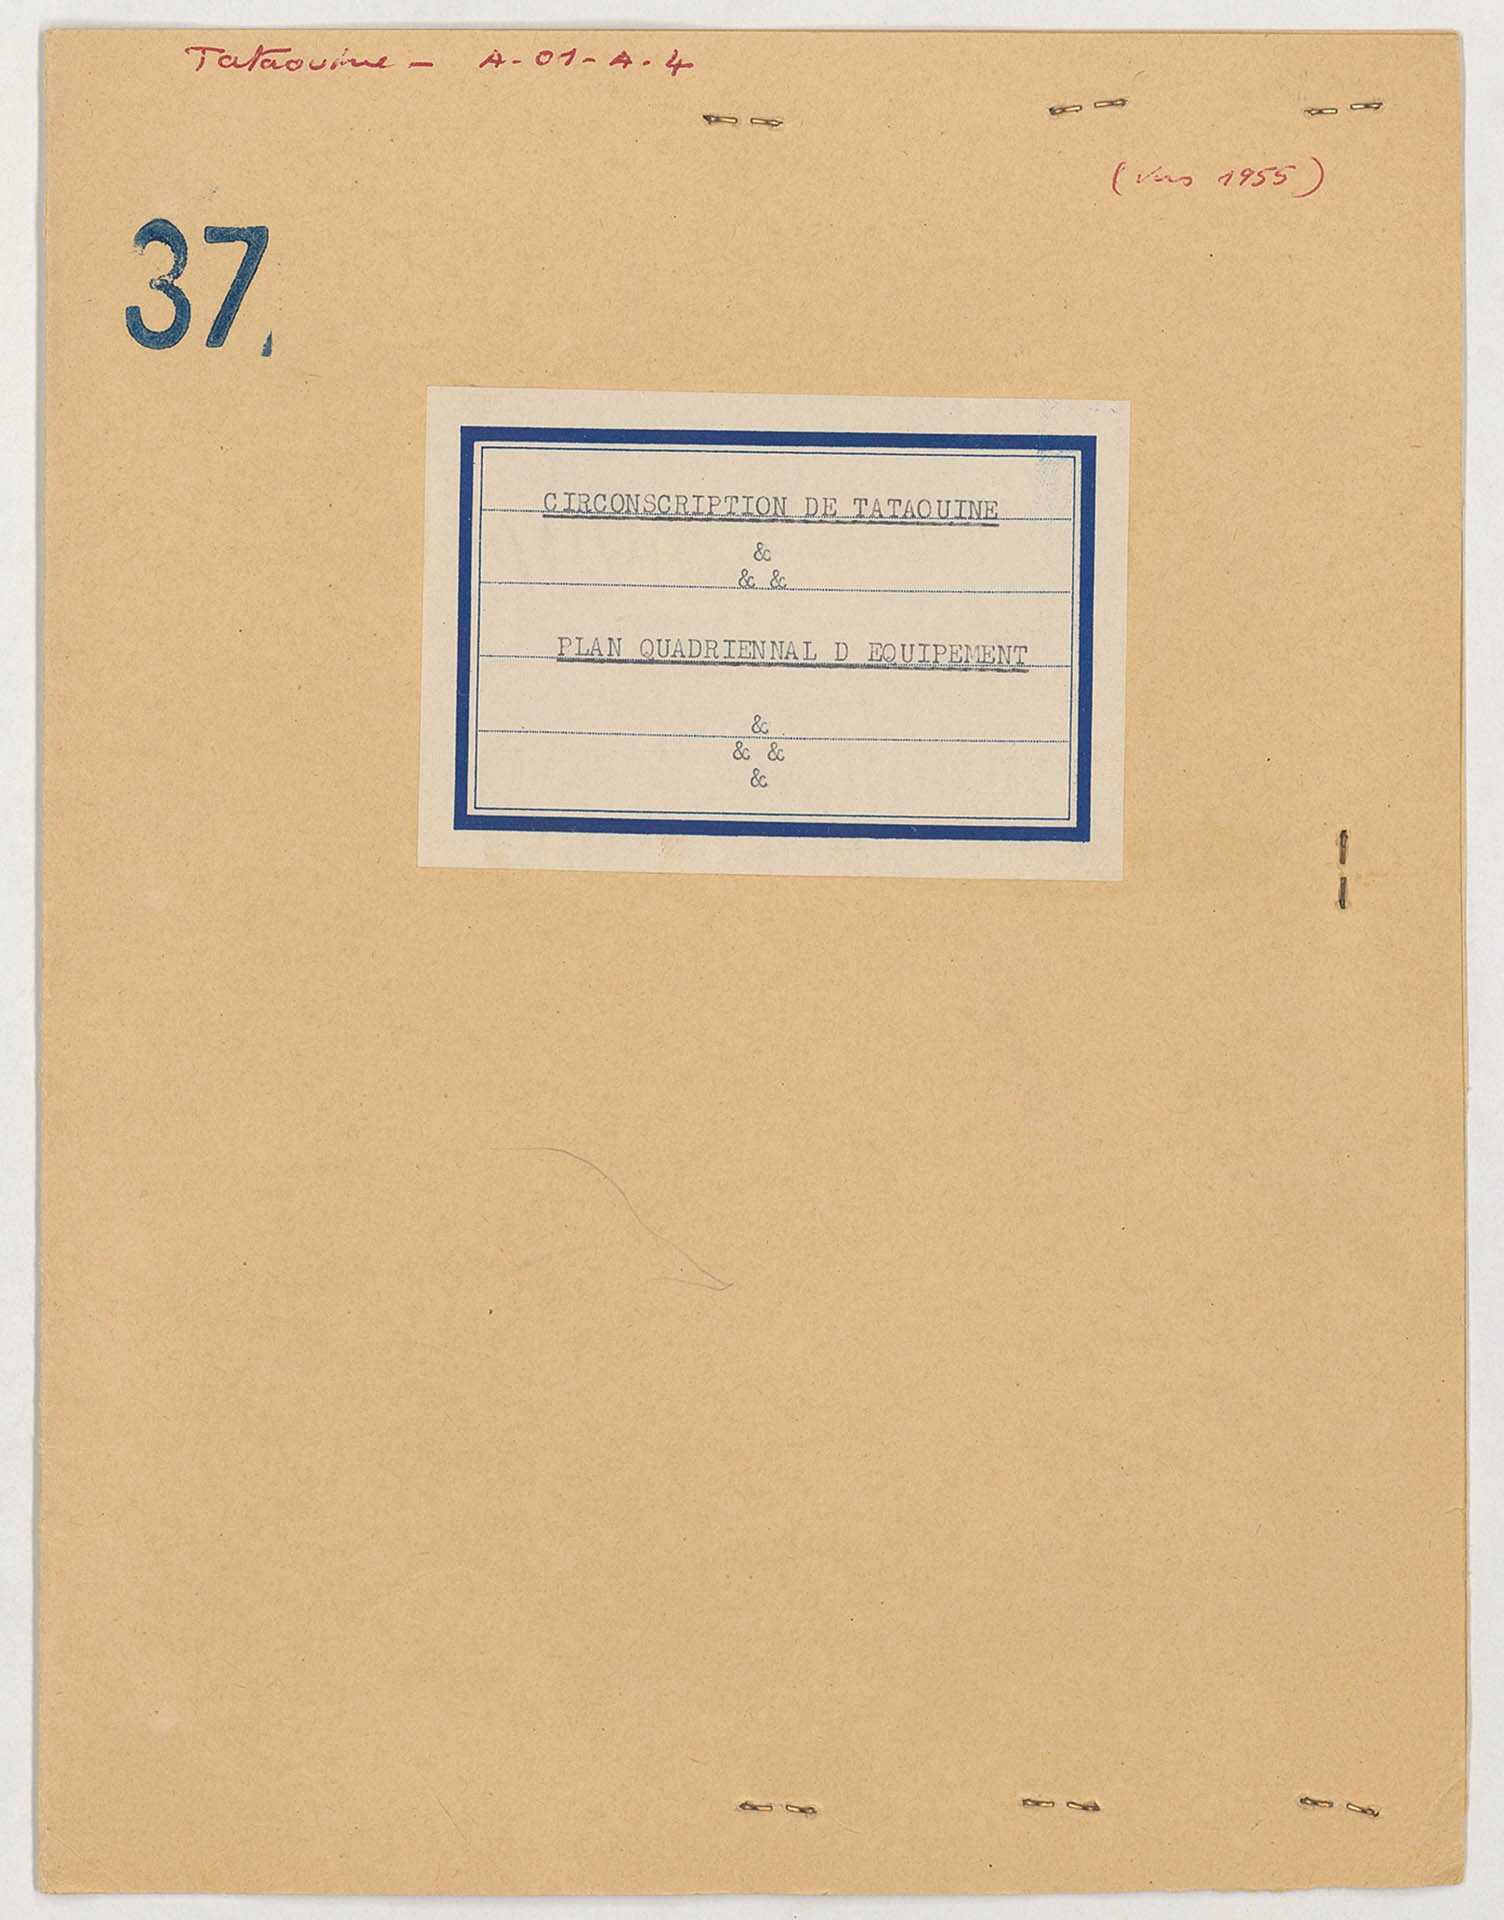 Circonscription de Tataouine, Plan quadriennal d'équipement de la circonscription de Tataouine, 25 f., cartes.